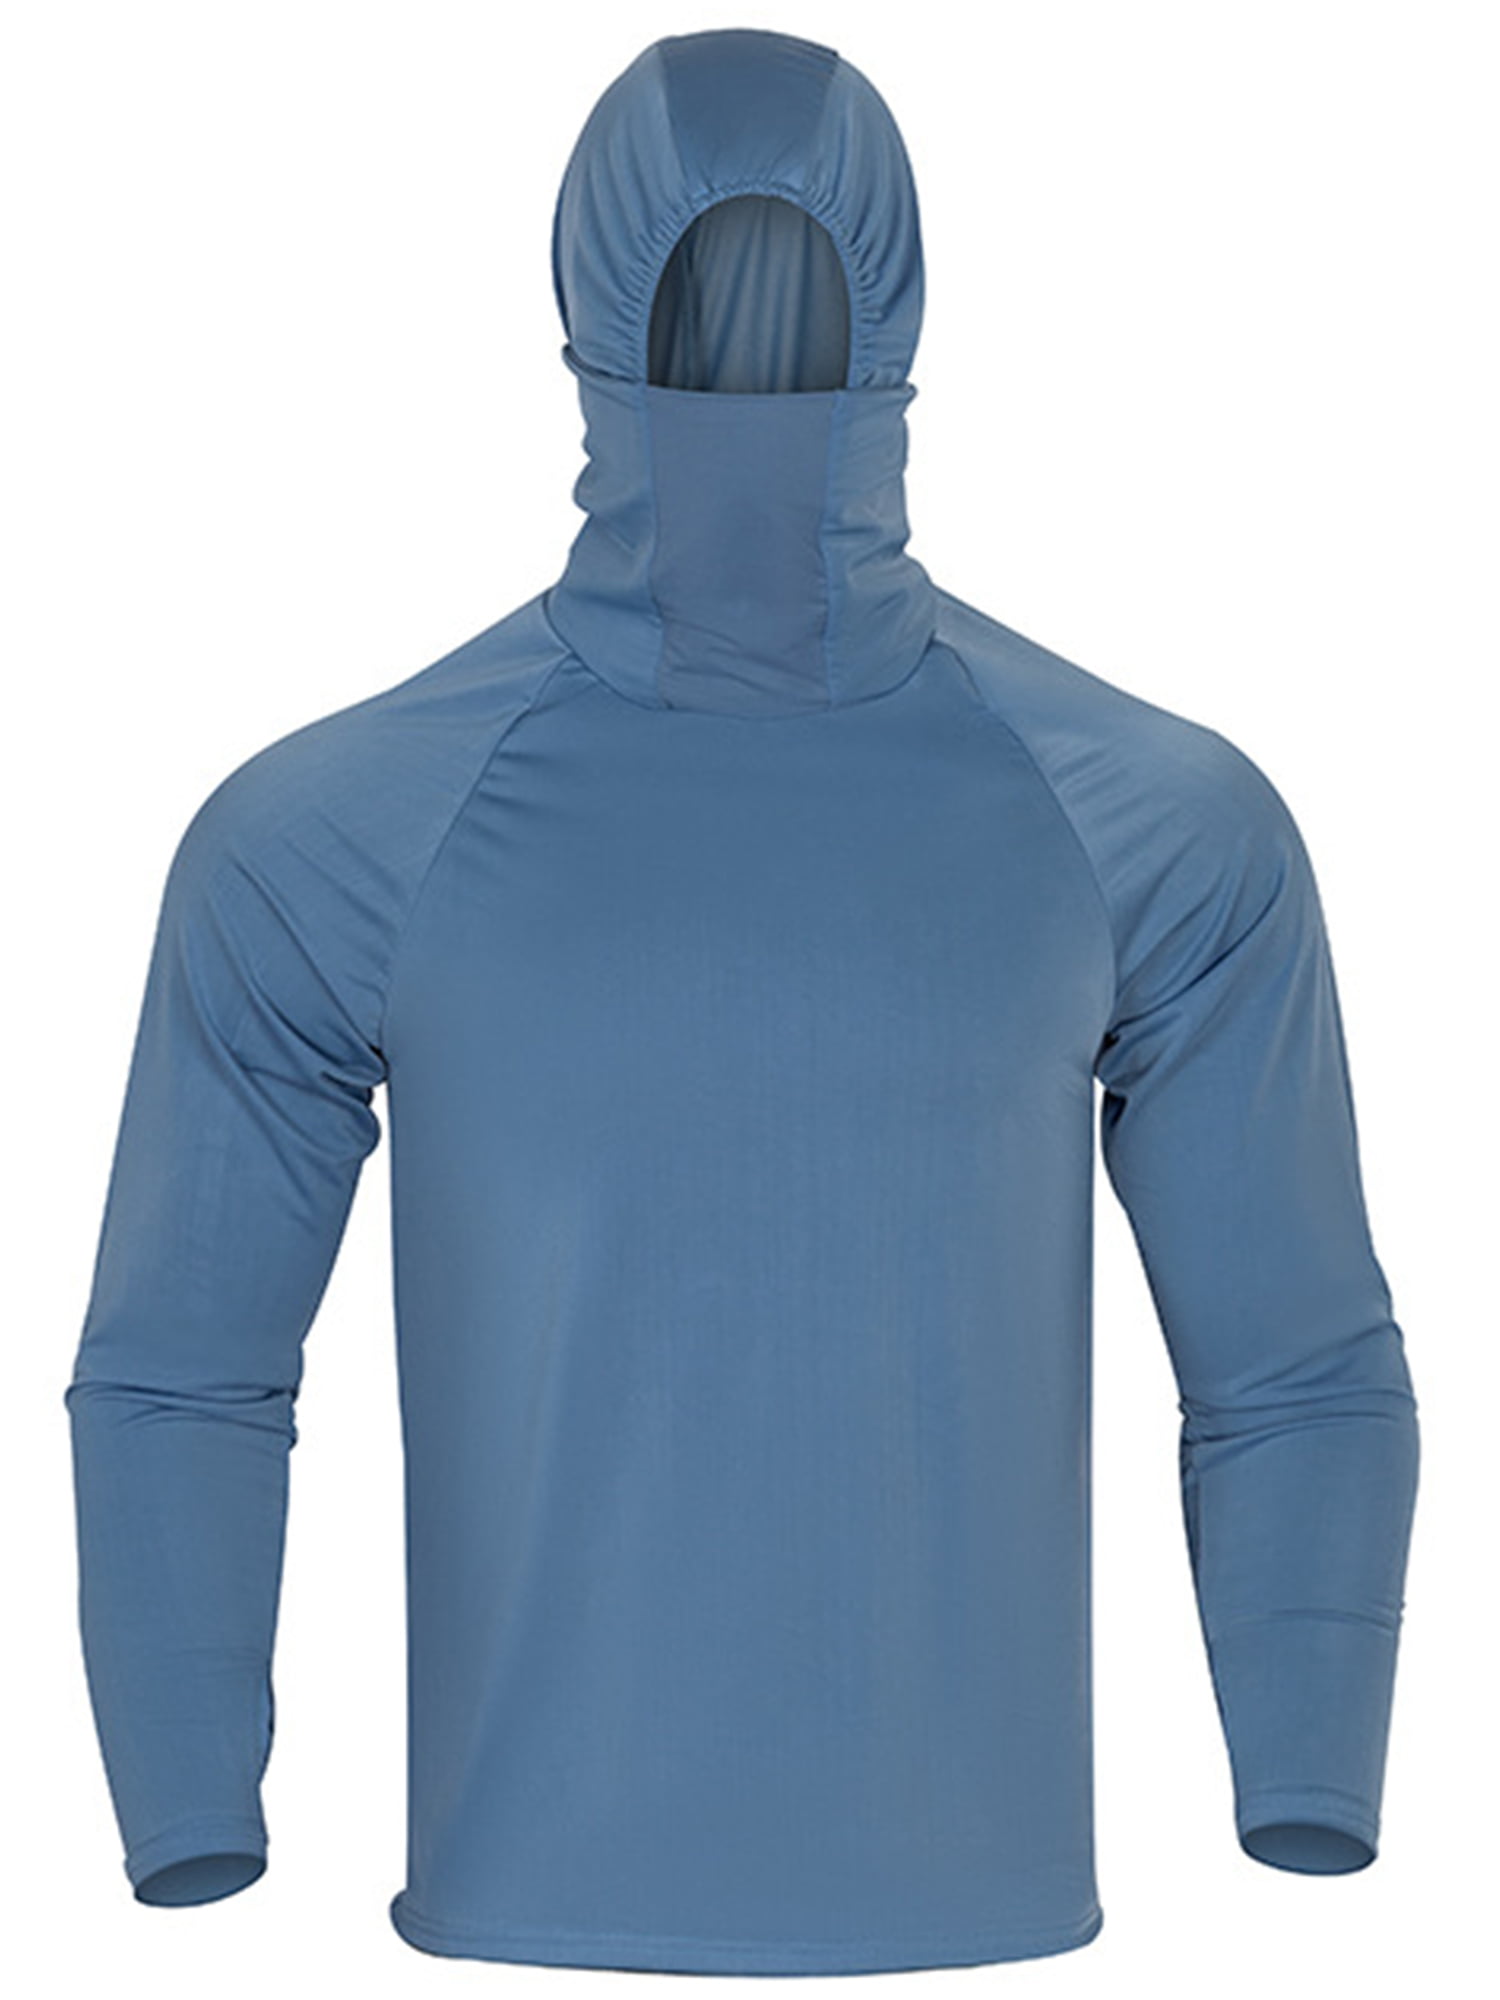 RT Mask Hoodies Shirts Suitable For Fishing Hunting Climbing